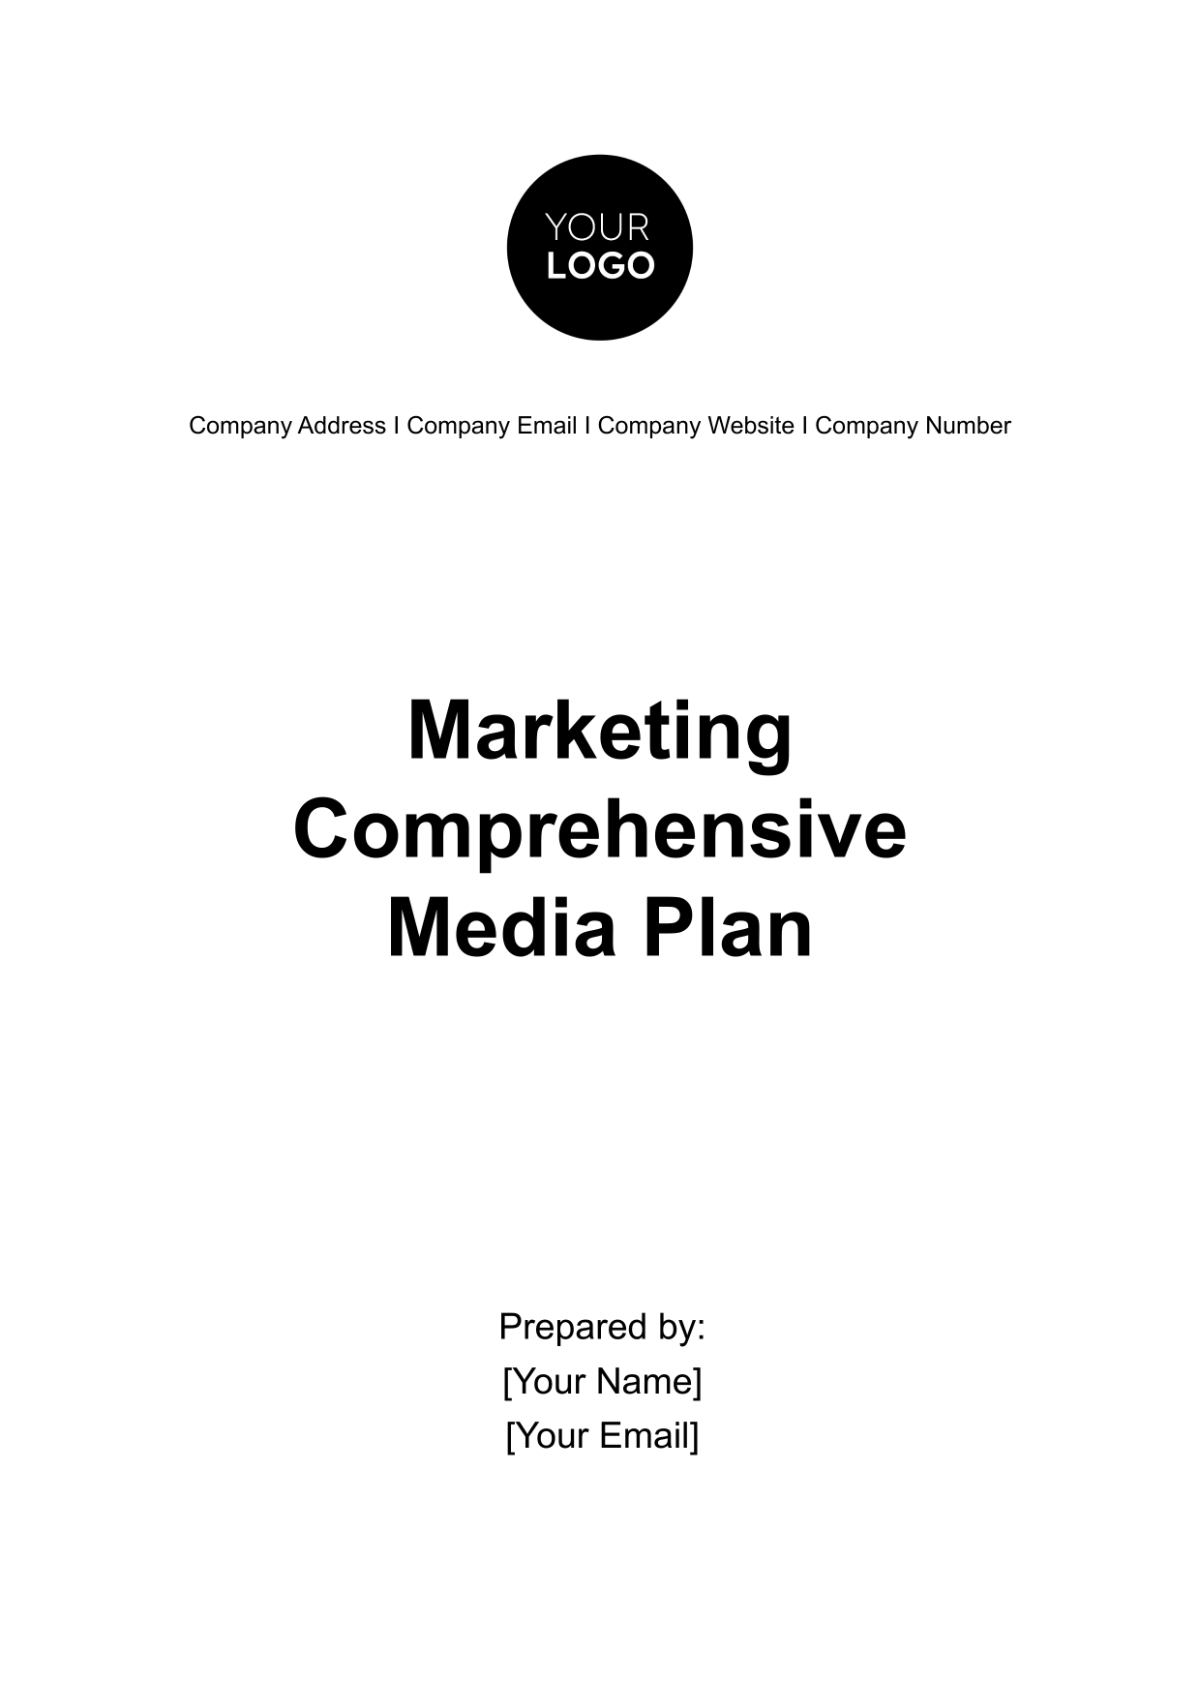 Marketing Comprehensive Media Plan Template